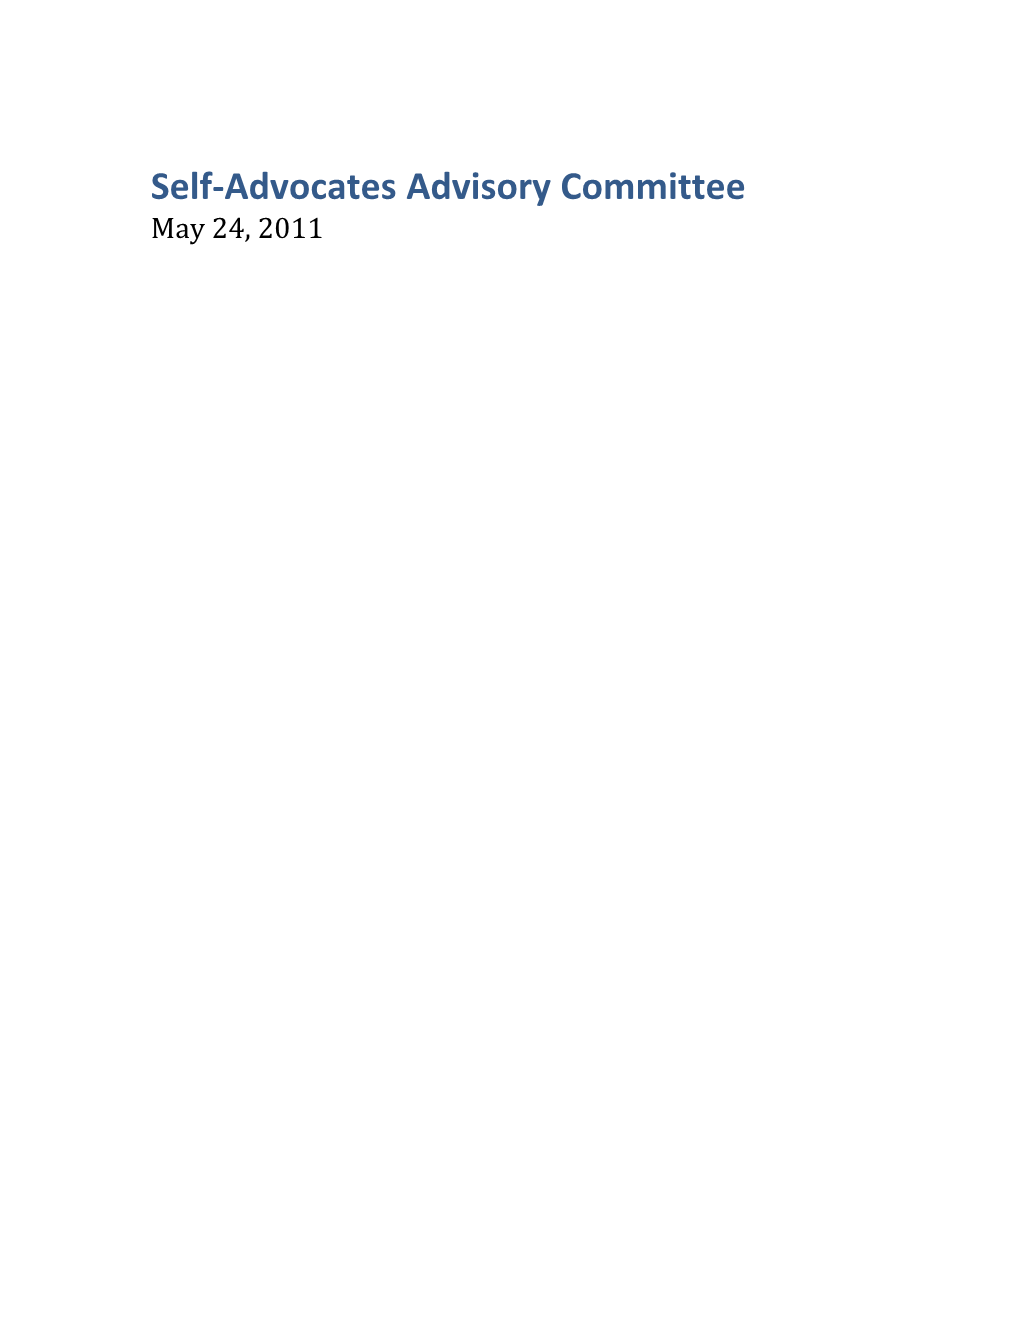 Self-Advocate Advisory Committee Meeting May 2011